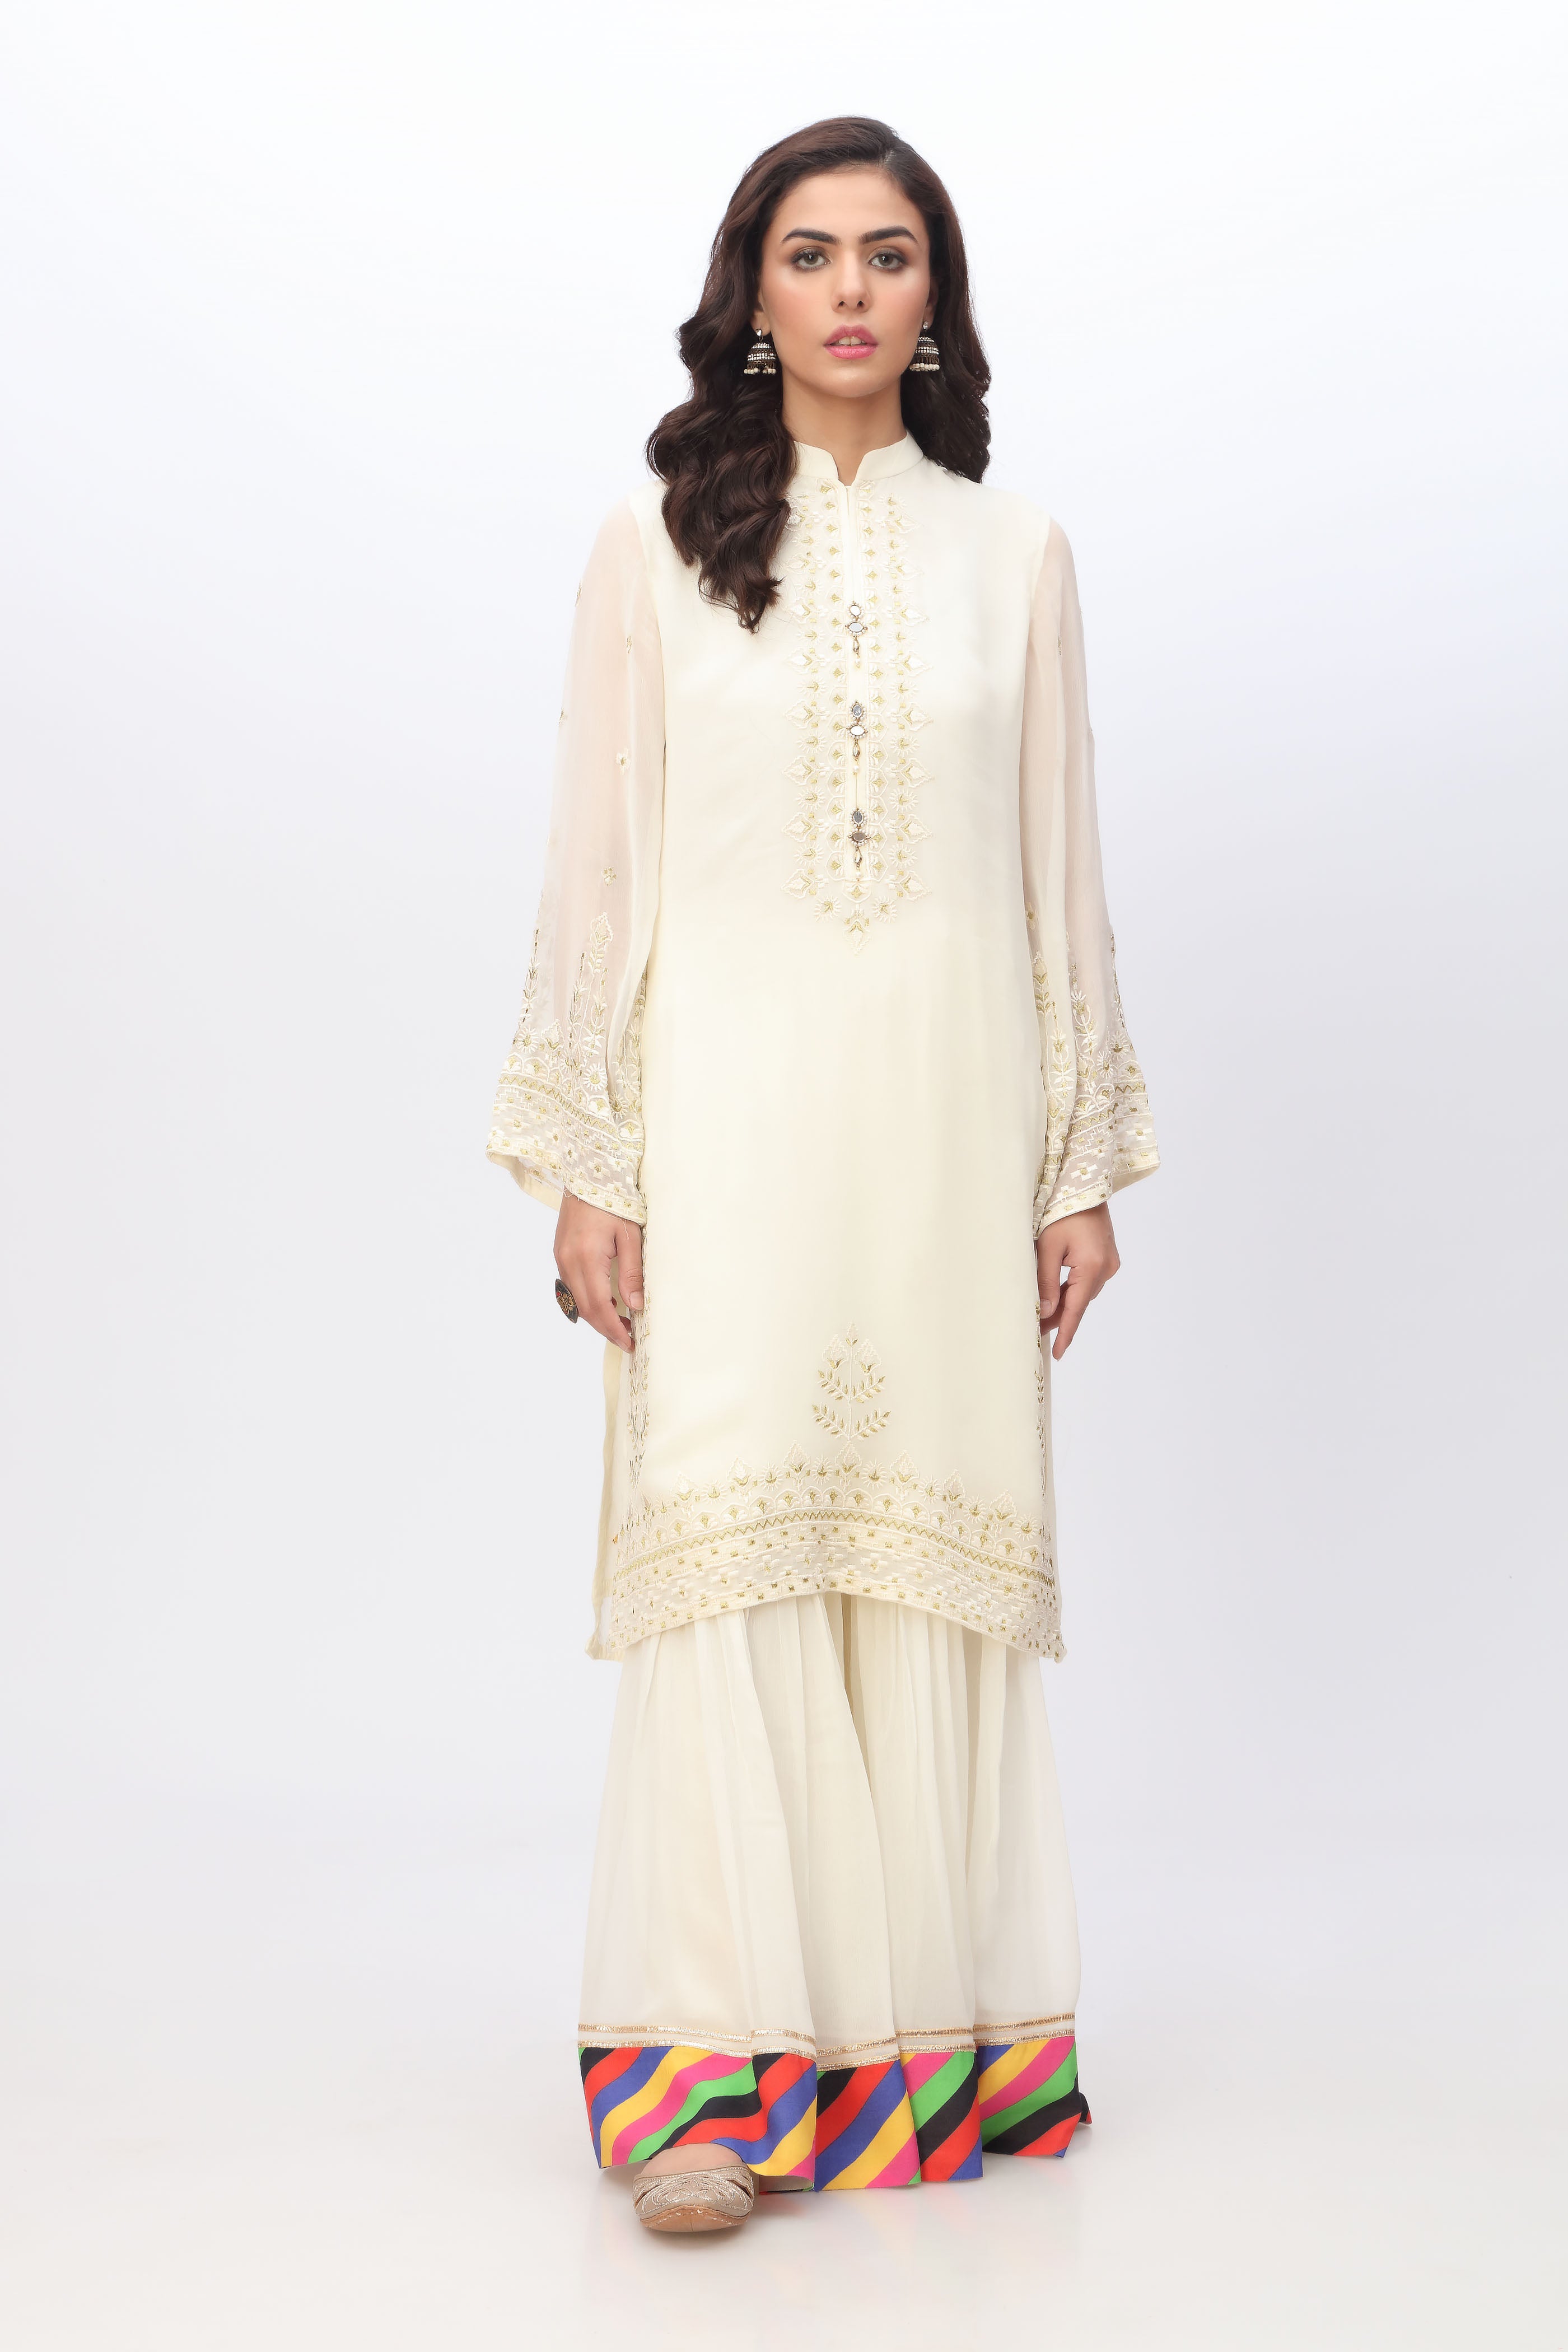 White Behar in Off White coloured Pak Chiffon fabric